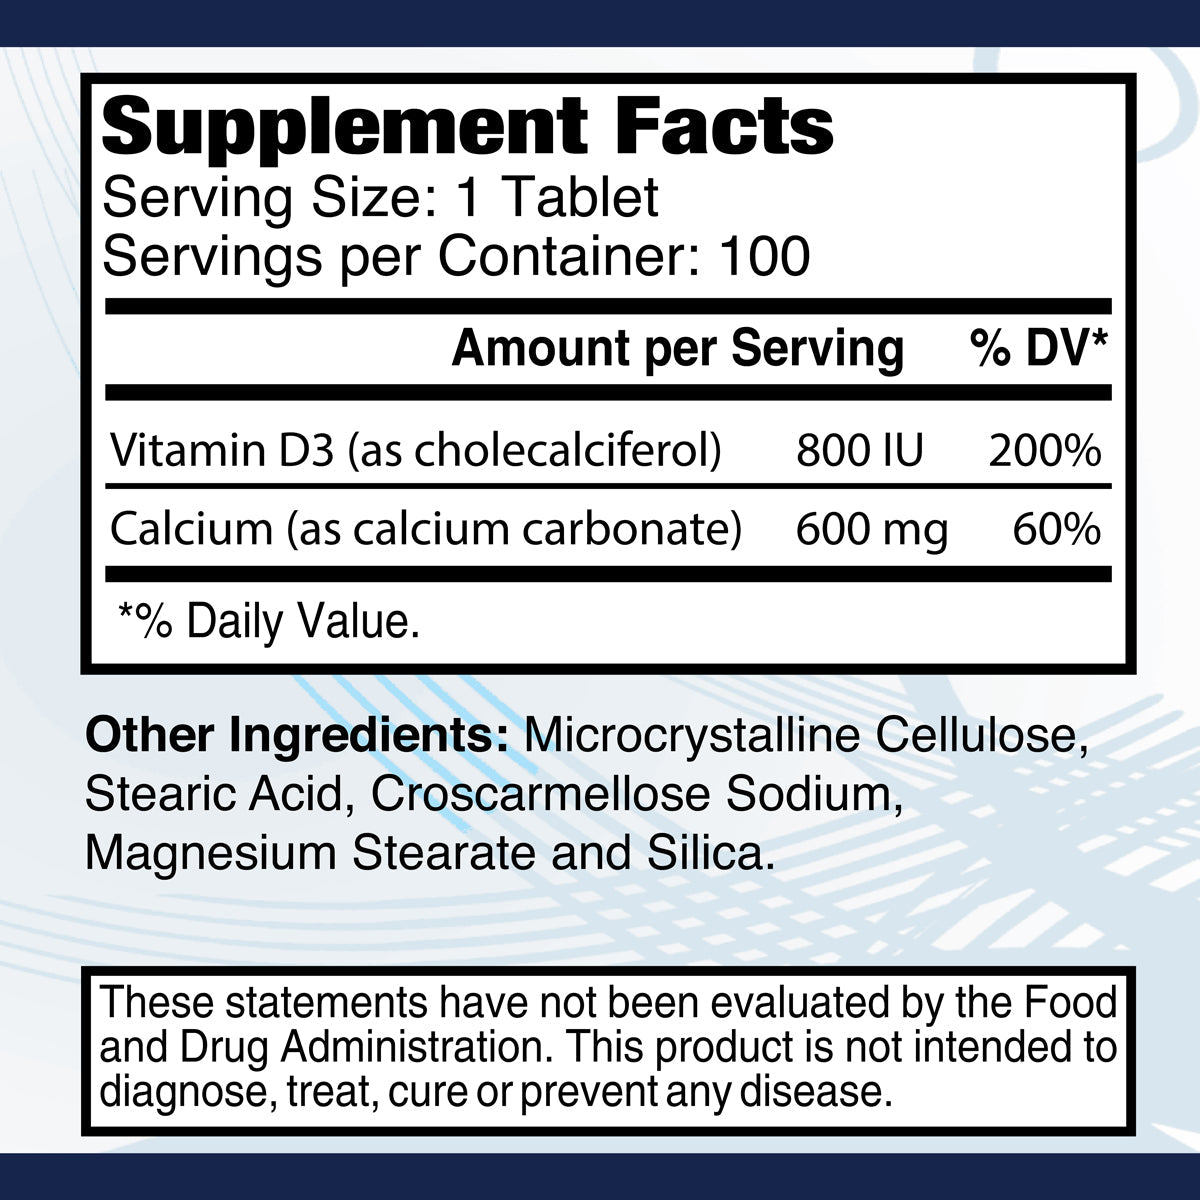 Calcium 600 mg + Vitamin D 100 tablets  - Master Case 48